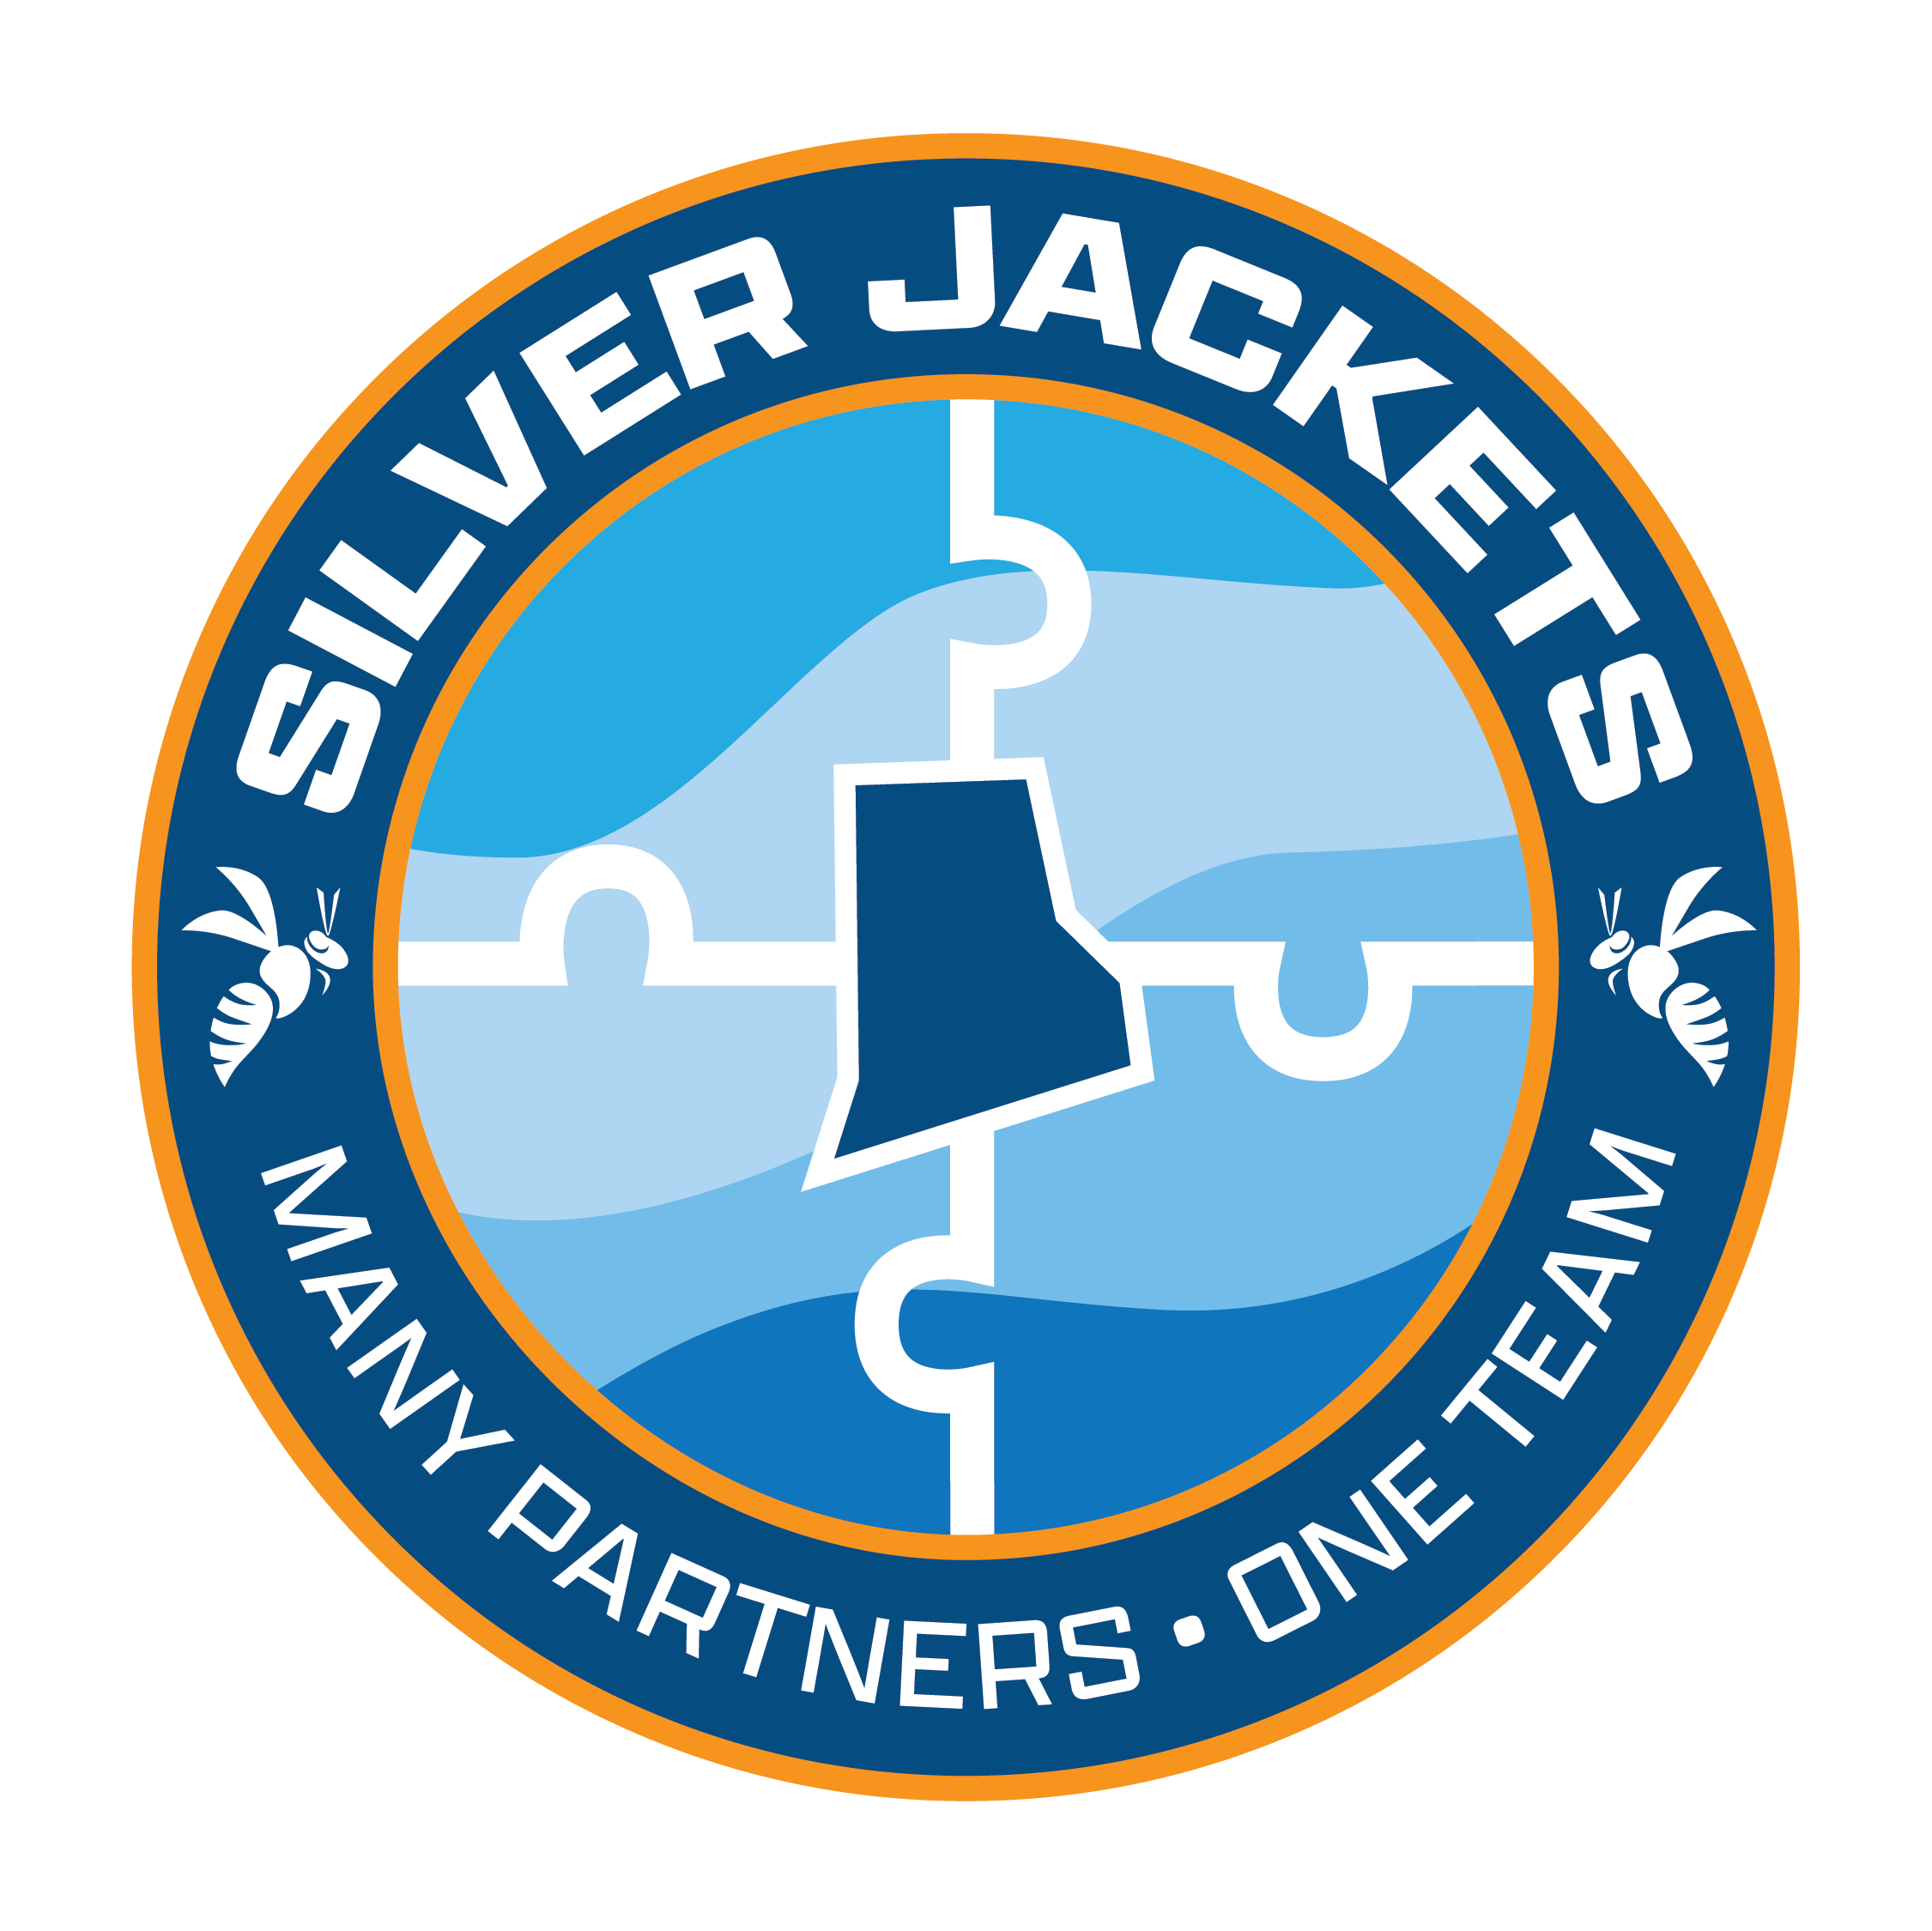 Rhode Island Silver Jackets logo